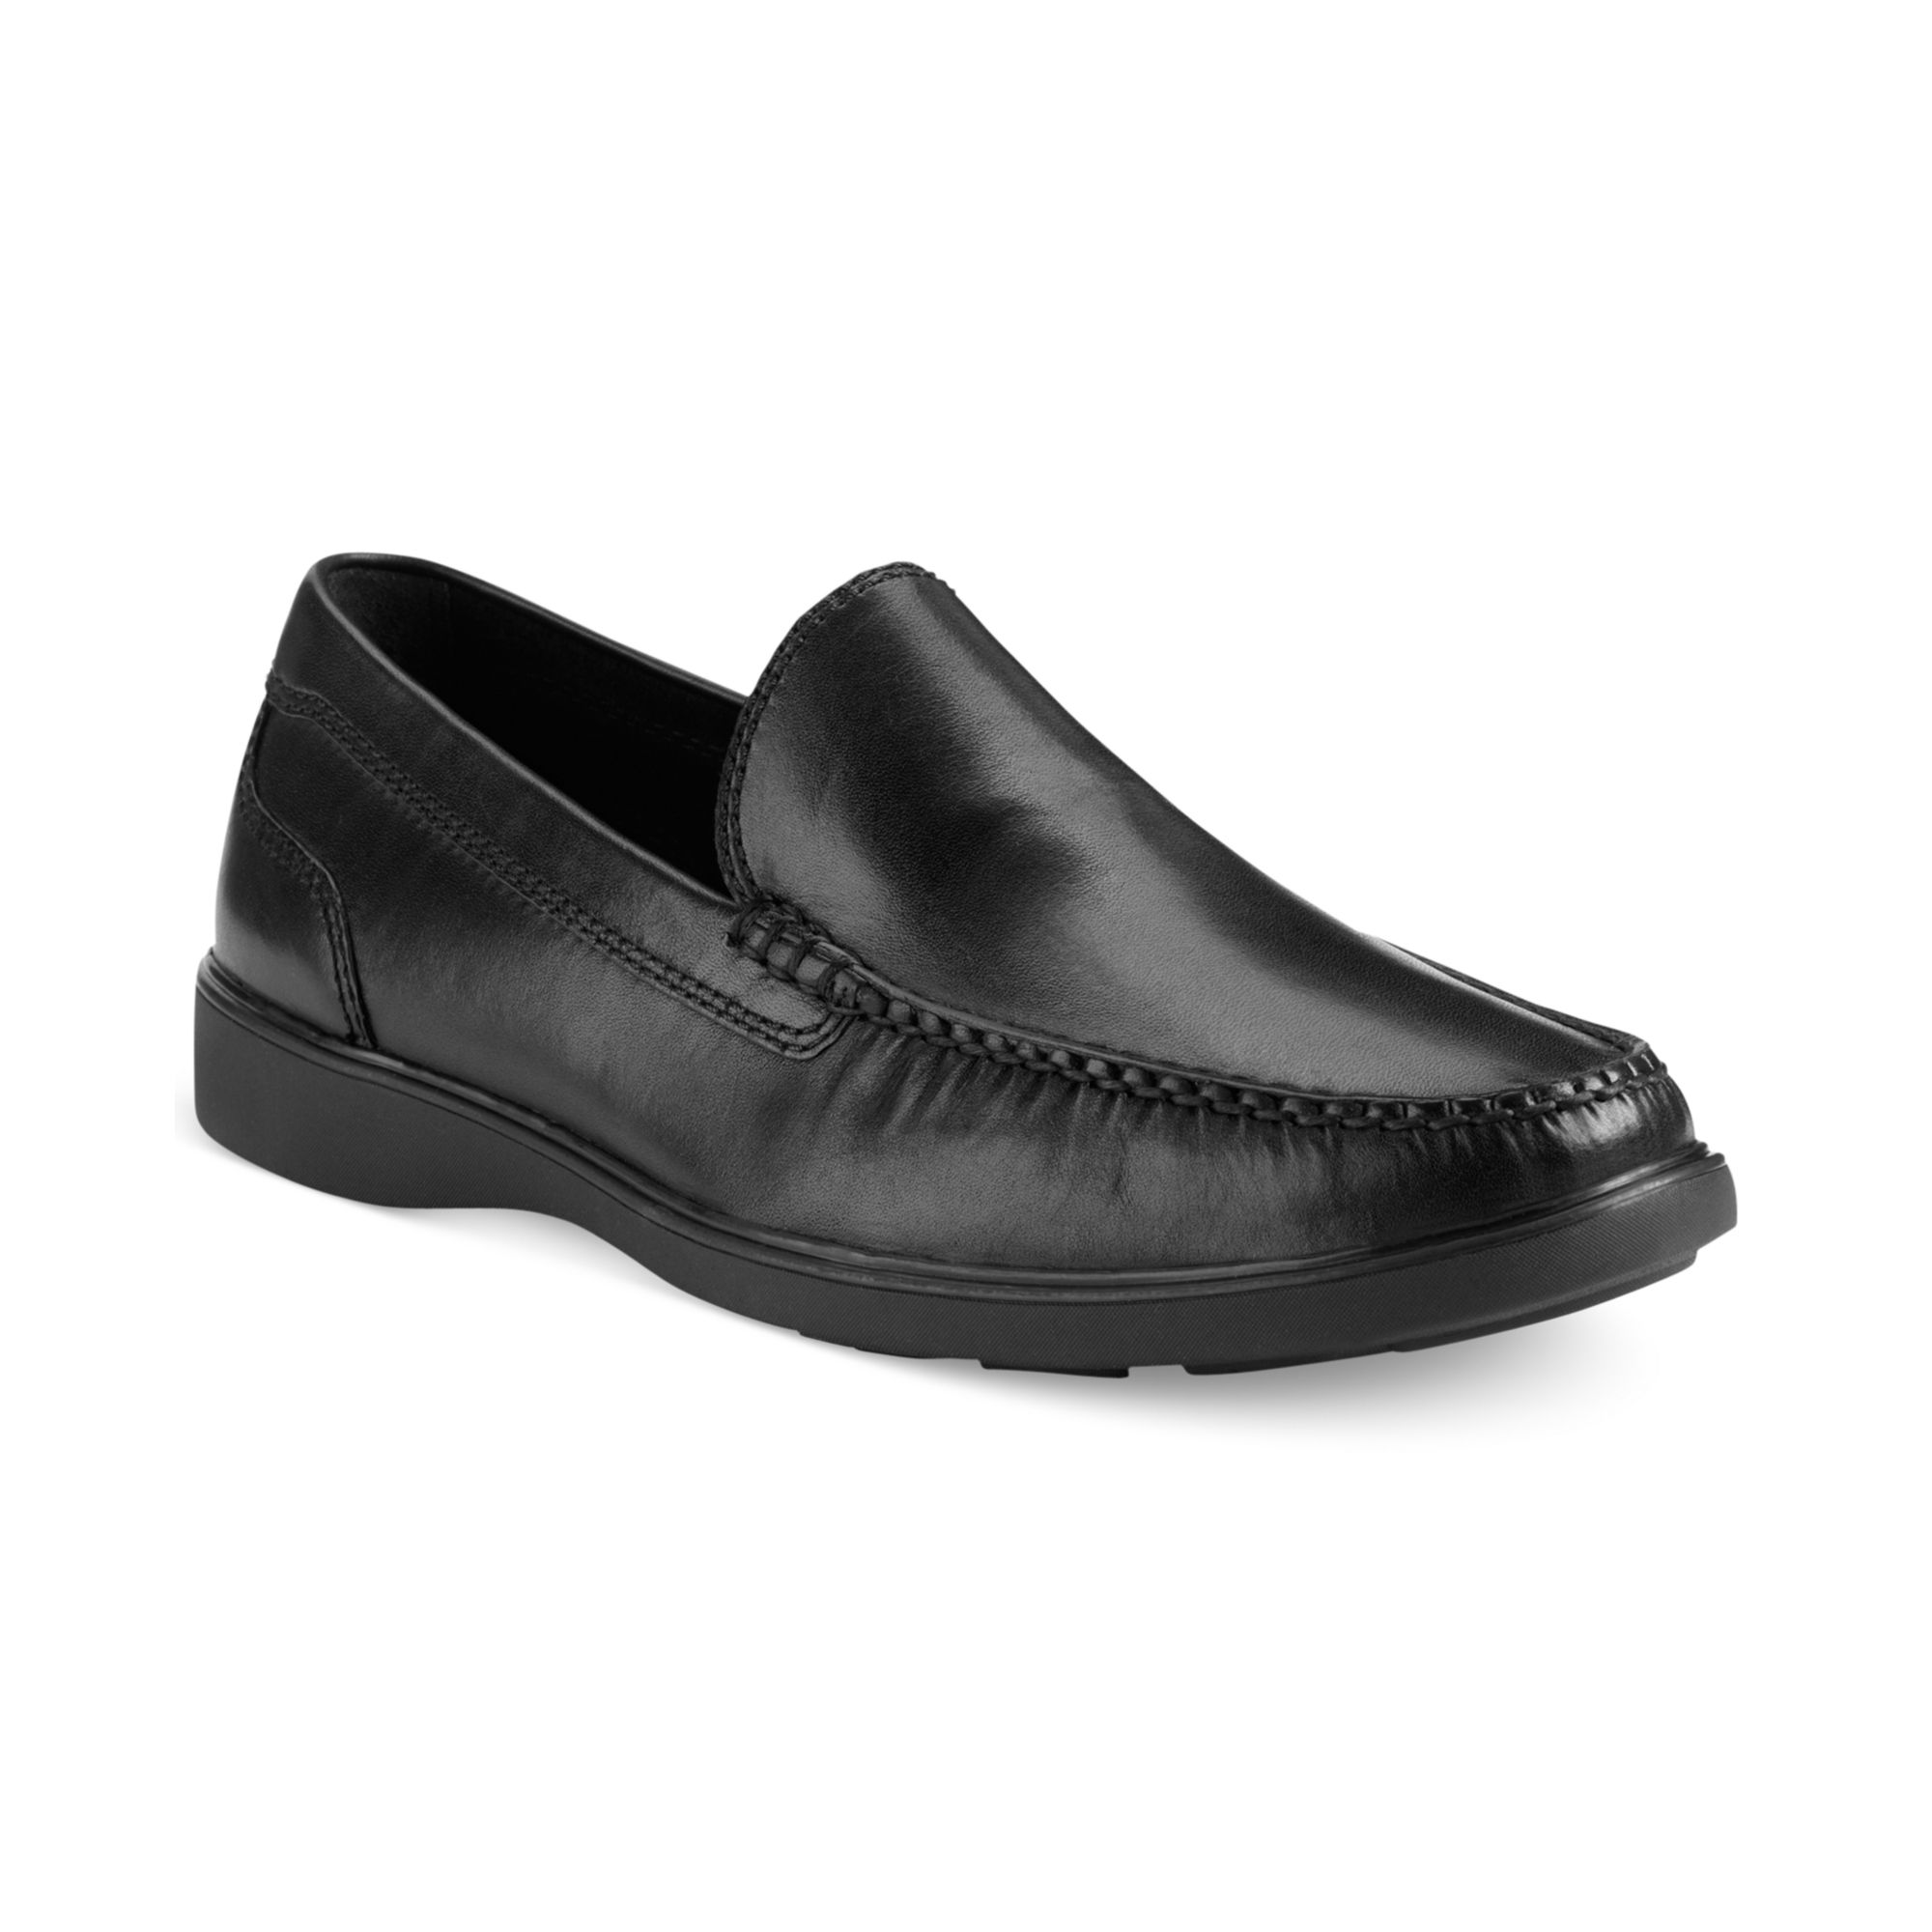 Lyst - Cole Haan Sutton Plain-toe Venetian Loafers in Black for Men